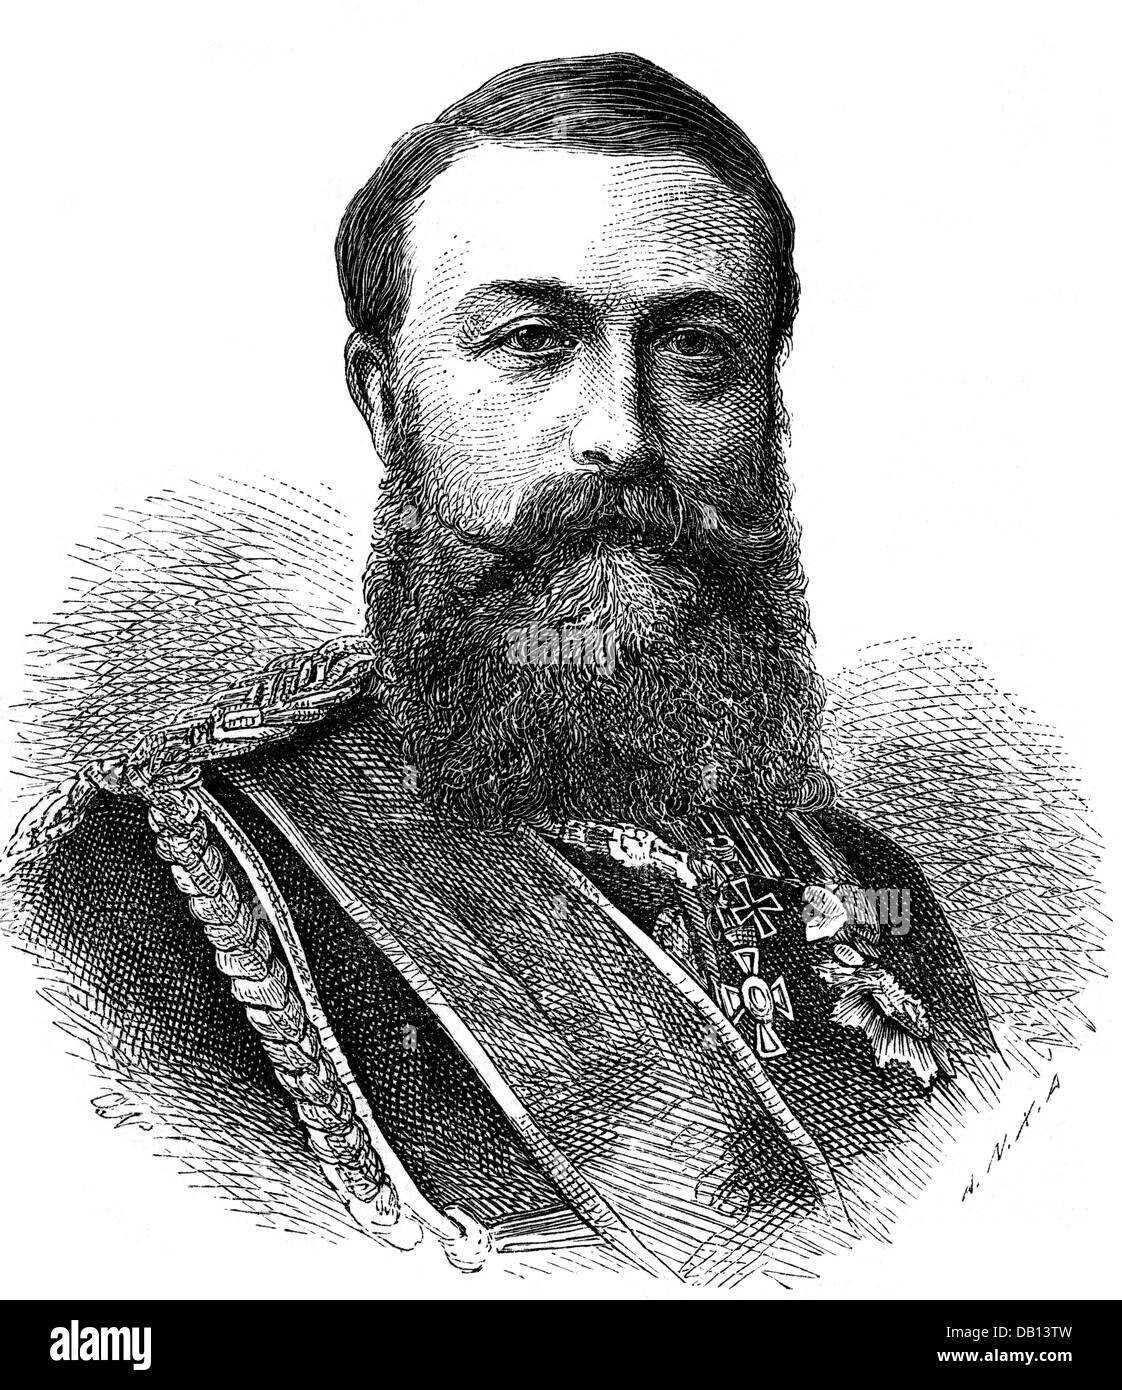 Frederick I, 9.9.1826 - 28.9.1907, Grand Duke of Baden 5.9.1856 - 28.9.1907, portrait, wood engraving, circa 1875, Stock Photo